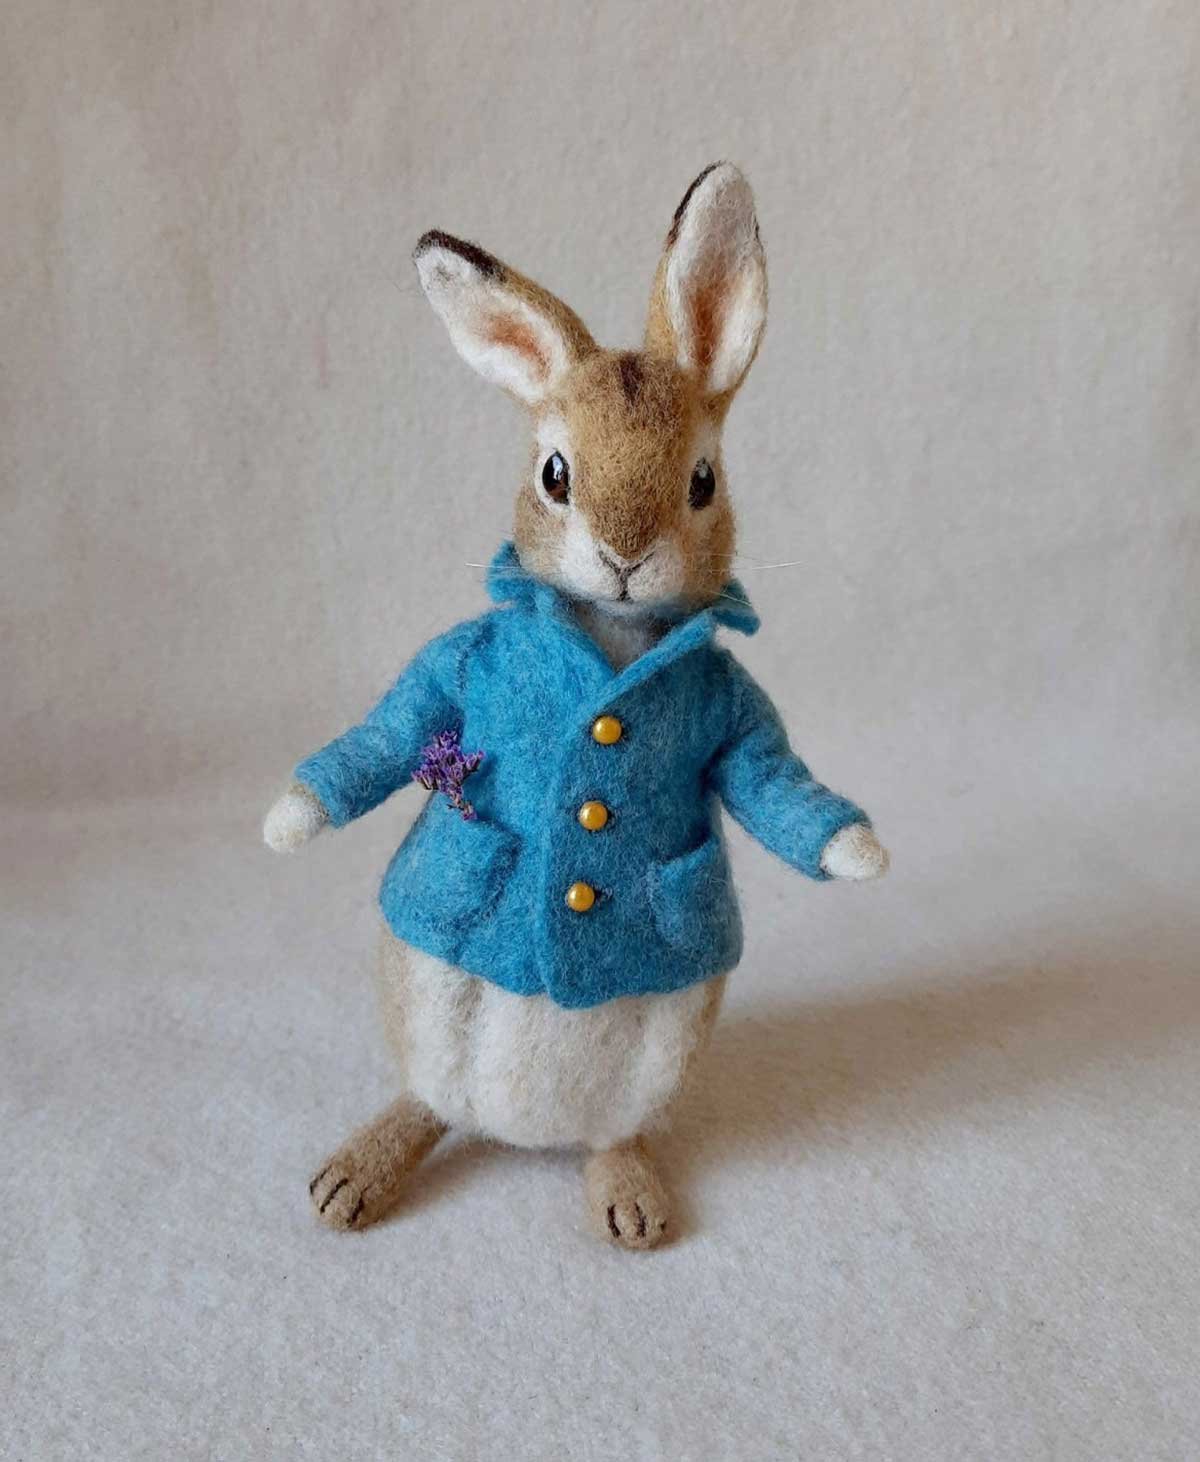 Peter Rabbit Nursery Decor, Peter Rabbit Baby Shower Decorations